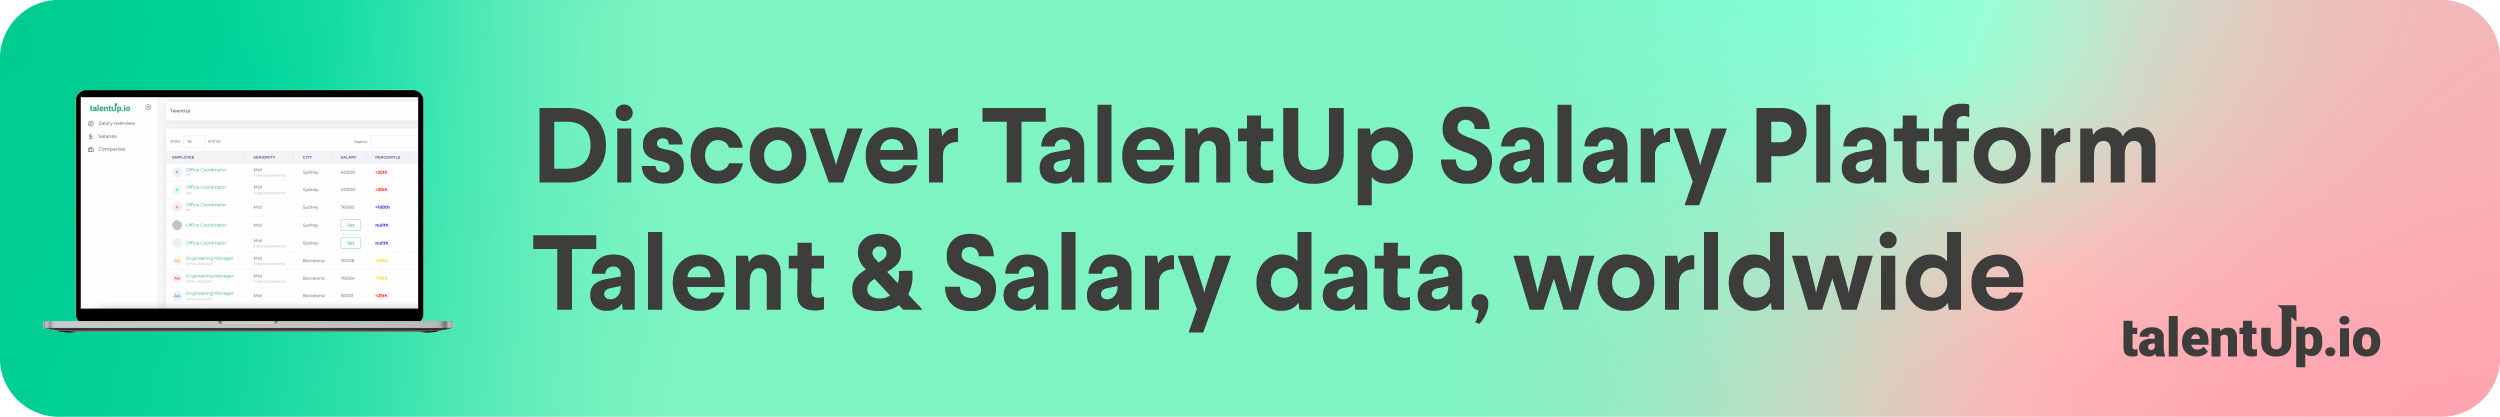 TalentUp Salary Platform